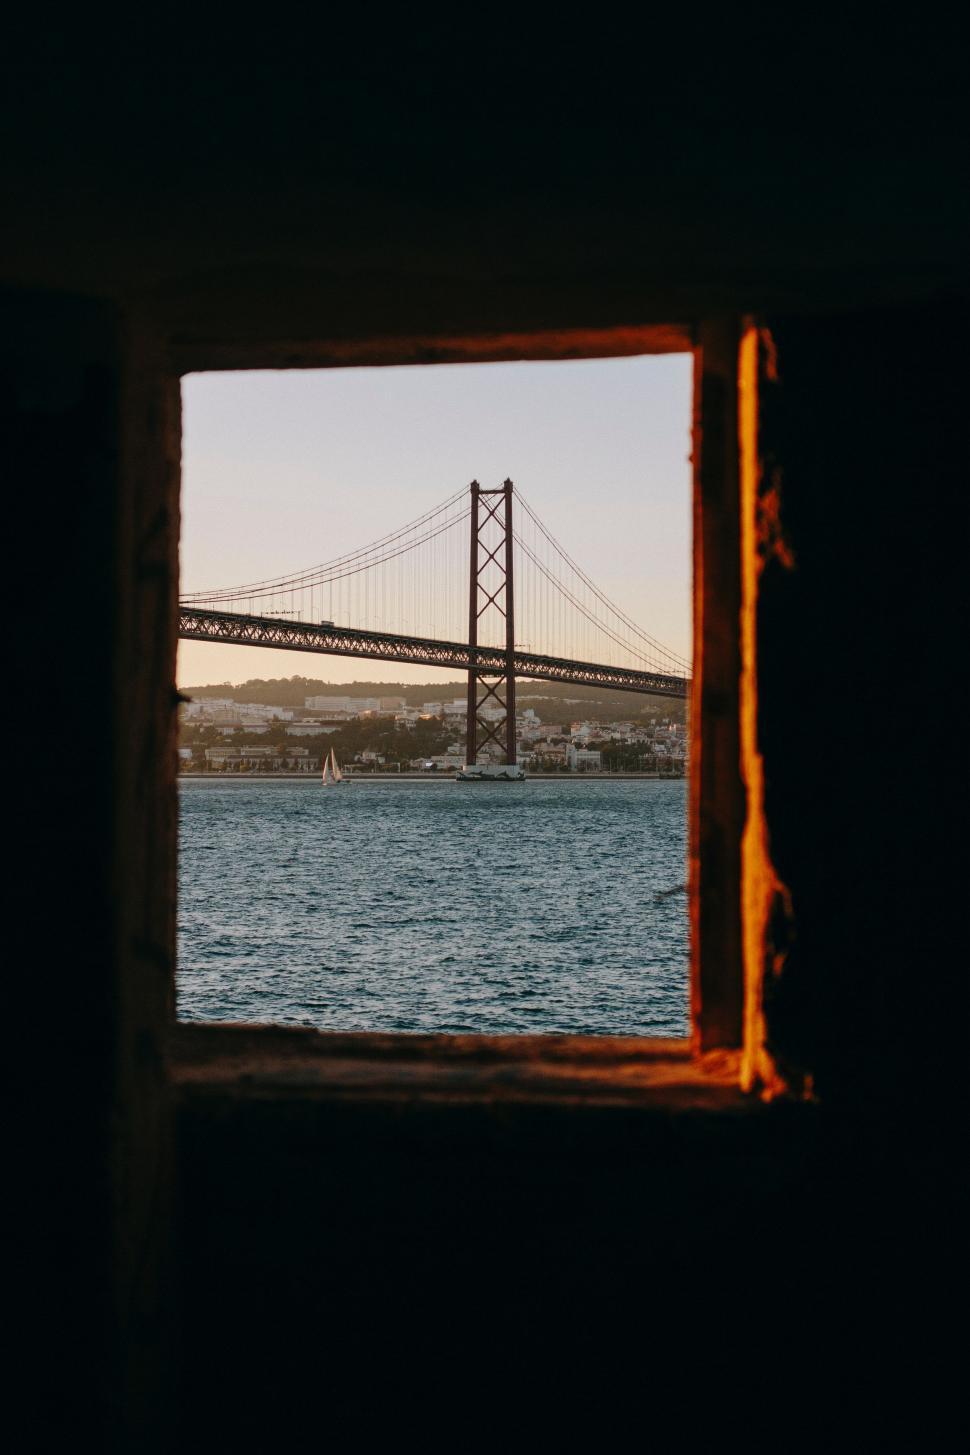 Free Image of The Bay Bridge Seen Through a Window 